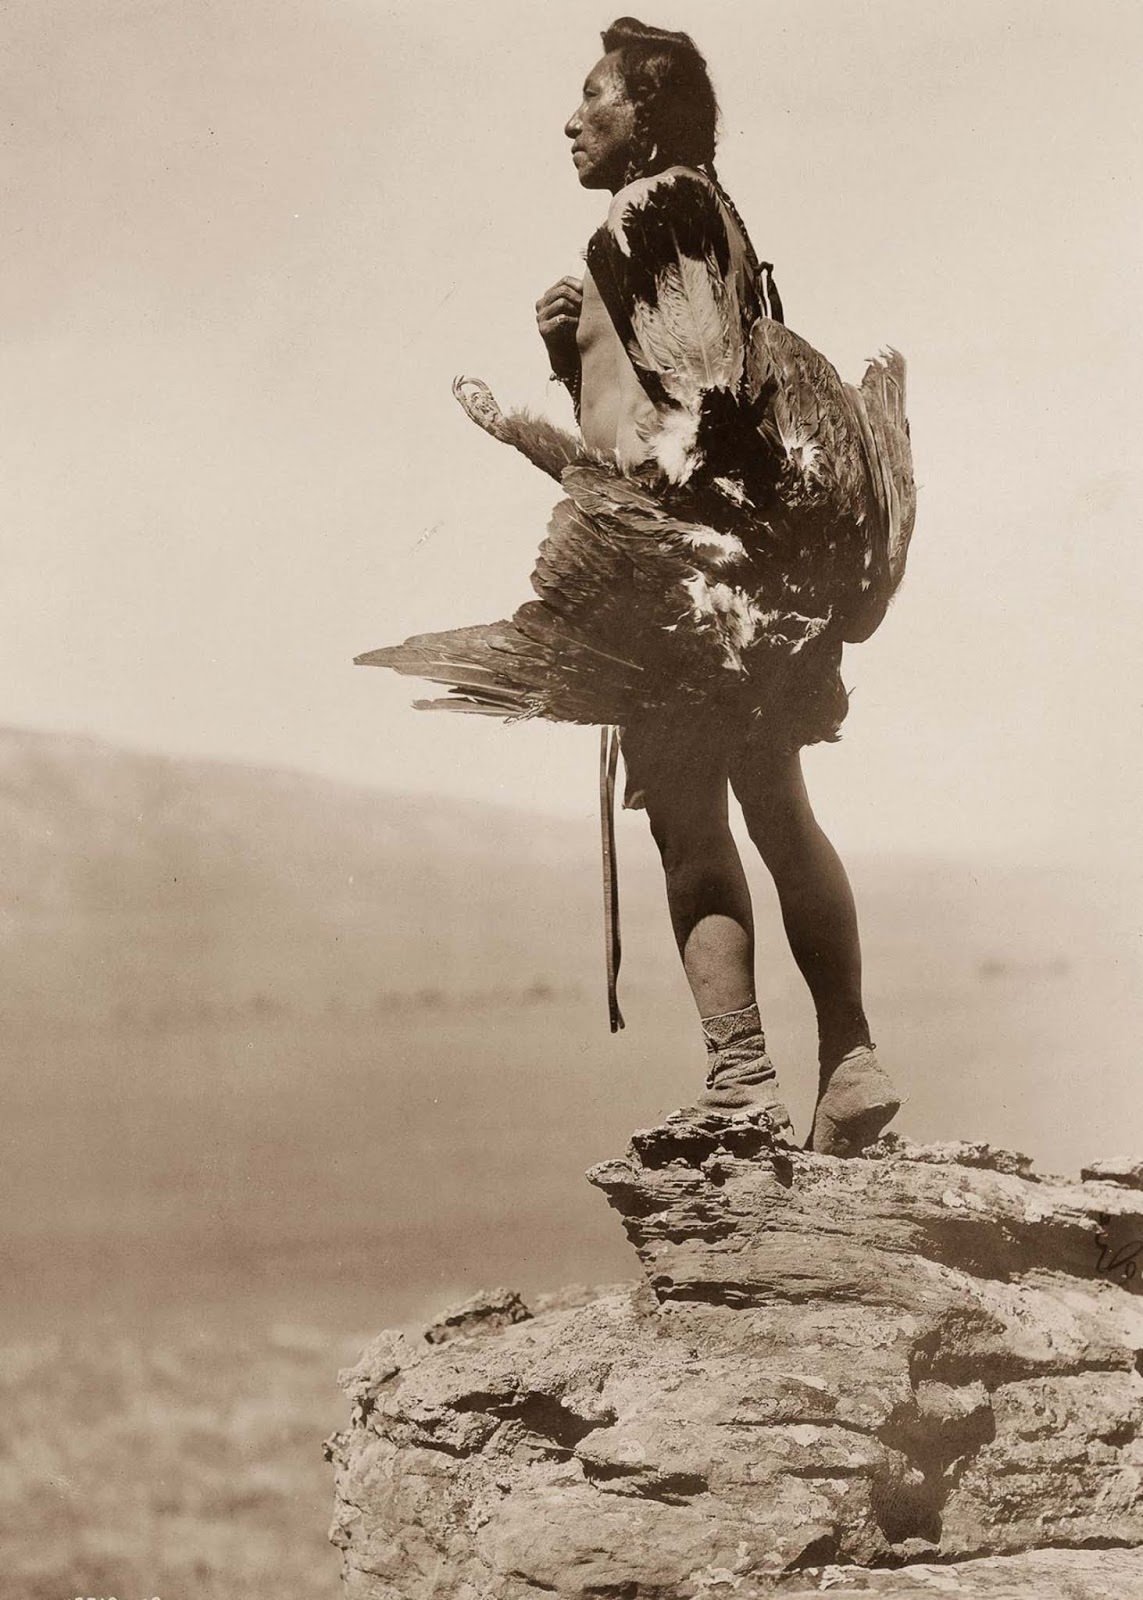 A Hidatsa man with a captured eagle. 1908.